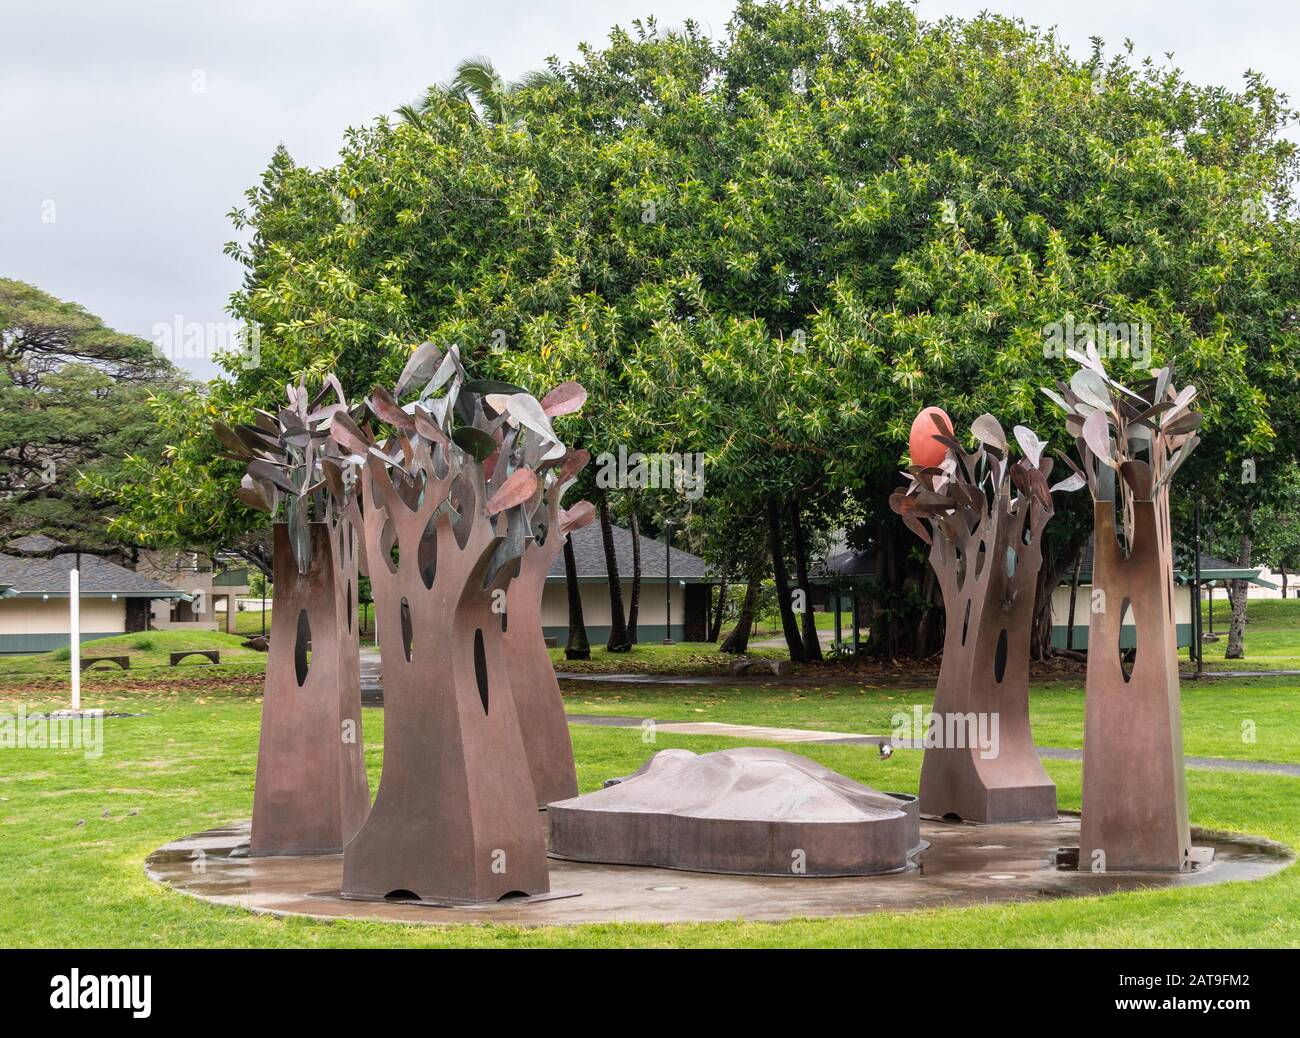 Kahului, Maui, Hawaii, USA. - 12. Januar 2020: Nahaufnahme der braunen rostigen Metallgruppe der Baumstatue auf grünem Rasen an der Universität von Hawaii, Maui colleg Stockfoto